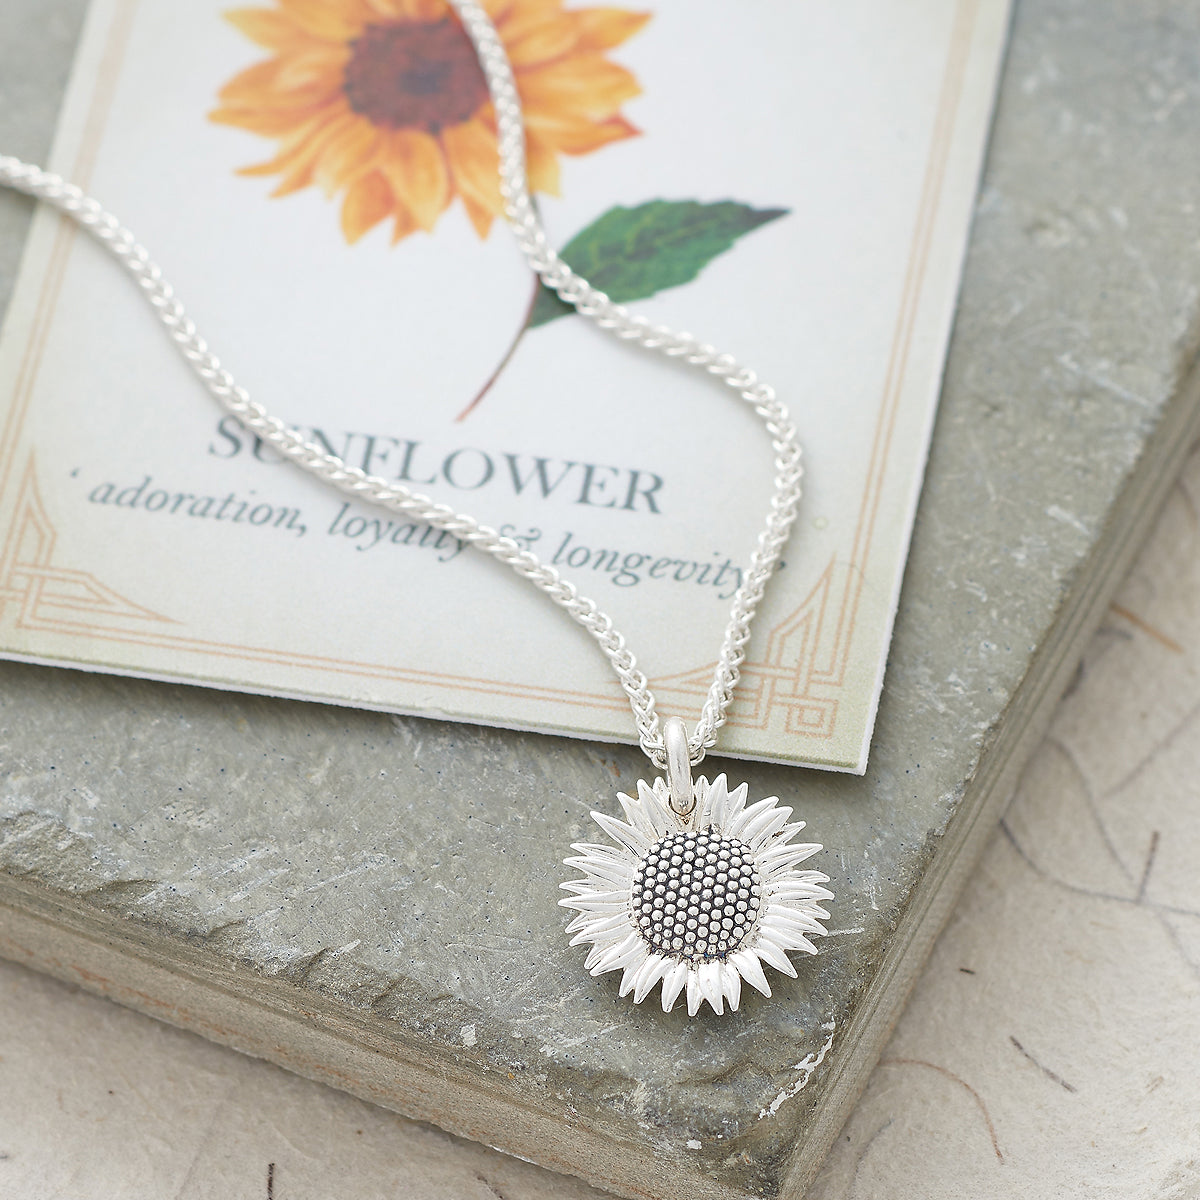 solid 925 sterling silver sunflower necklace pendant scarlett jewellery